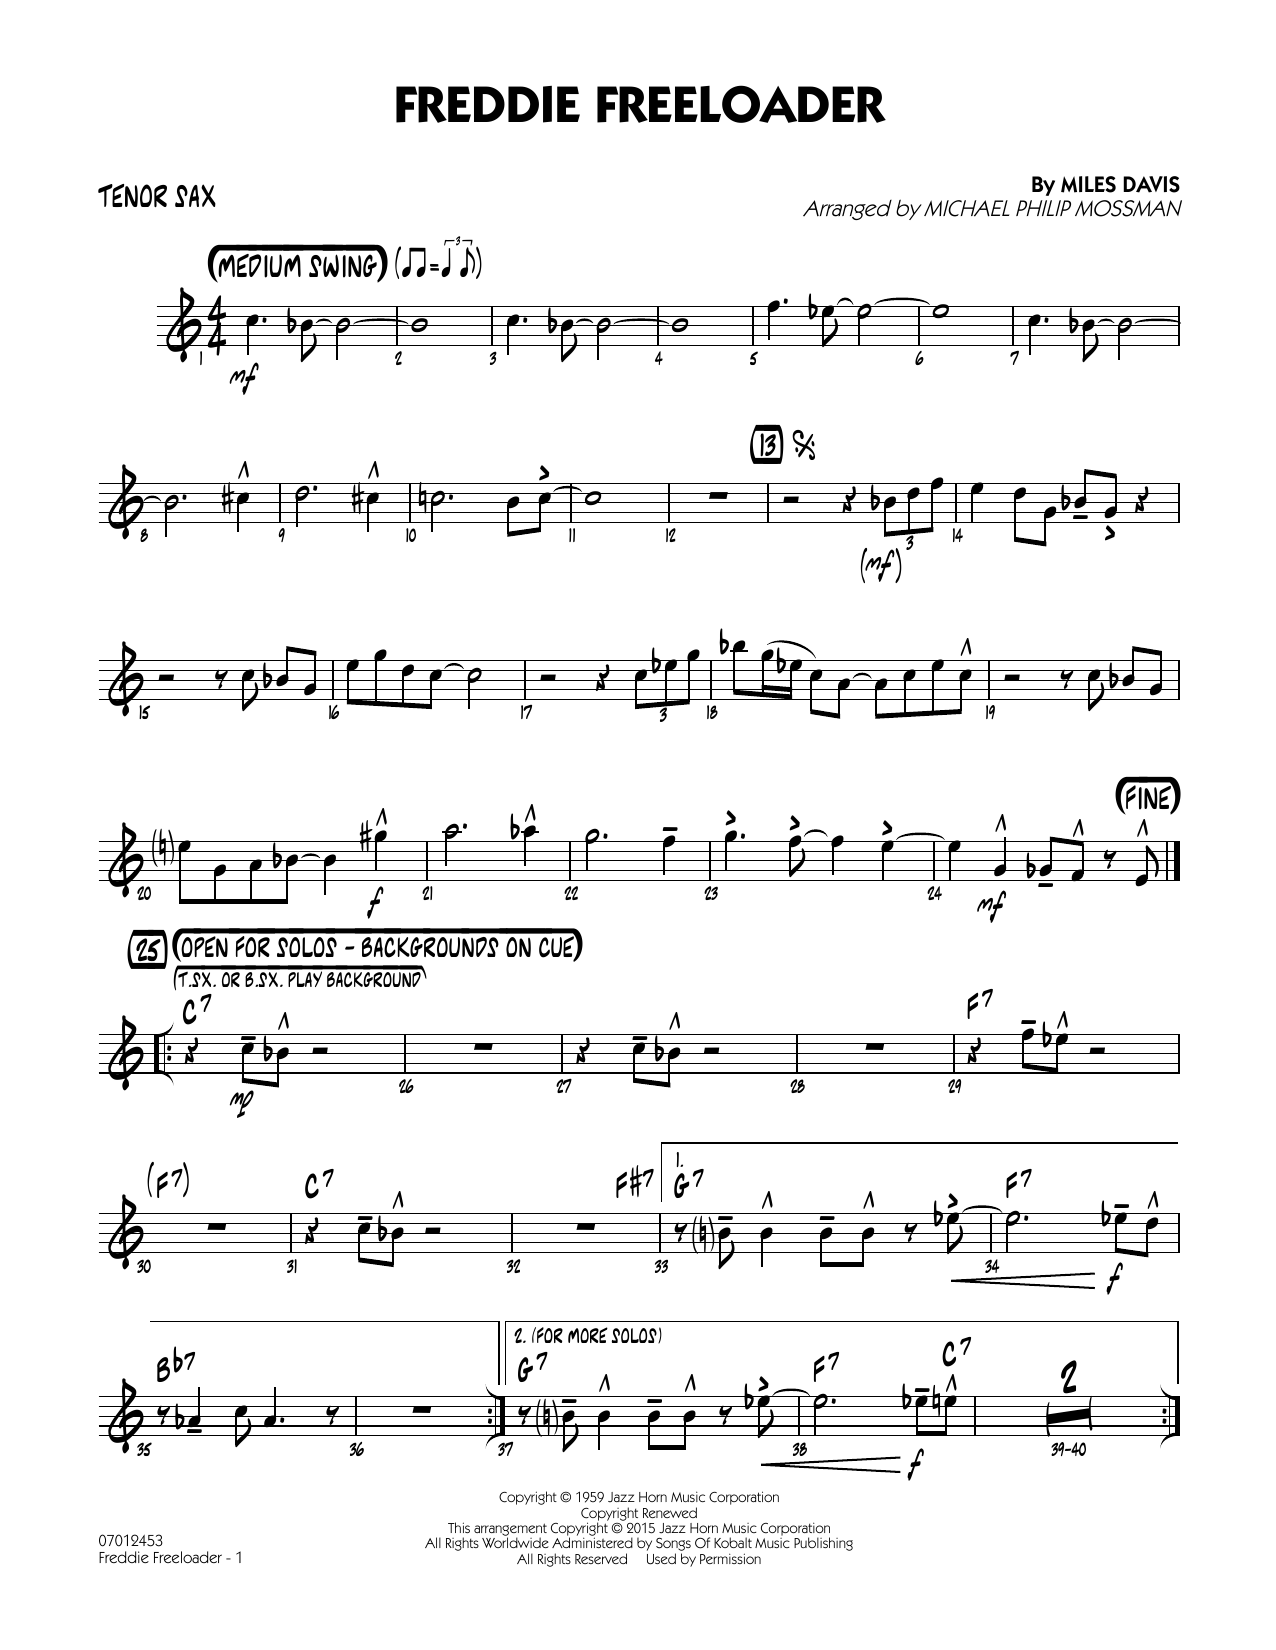 Michael Philip Mossman Freddie Freeloader - Tenor Sax sheet music notes and chords. Download Printable PDF.